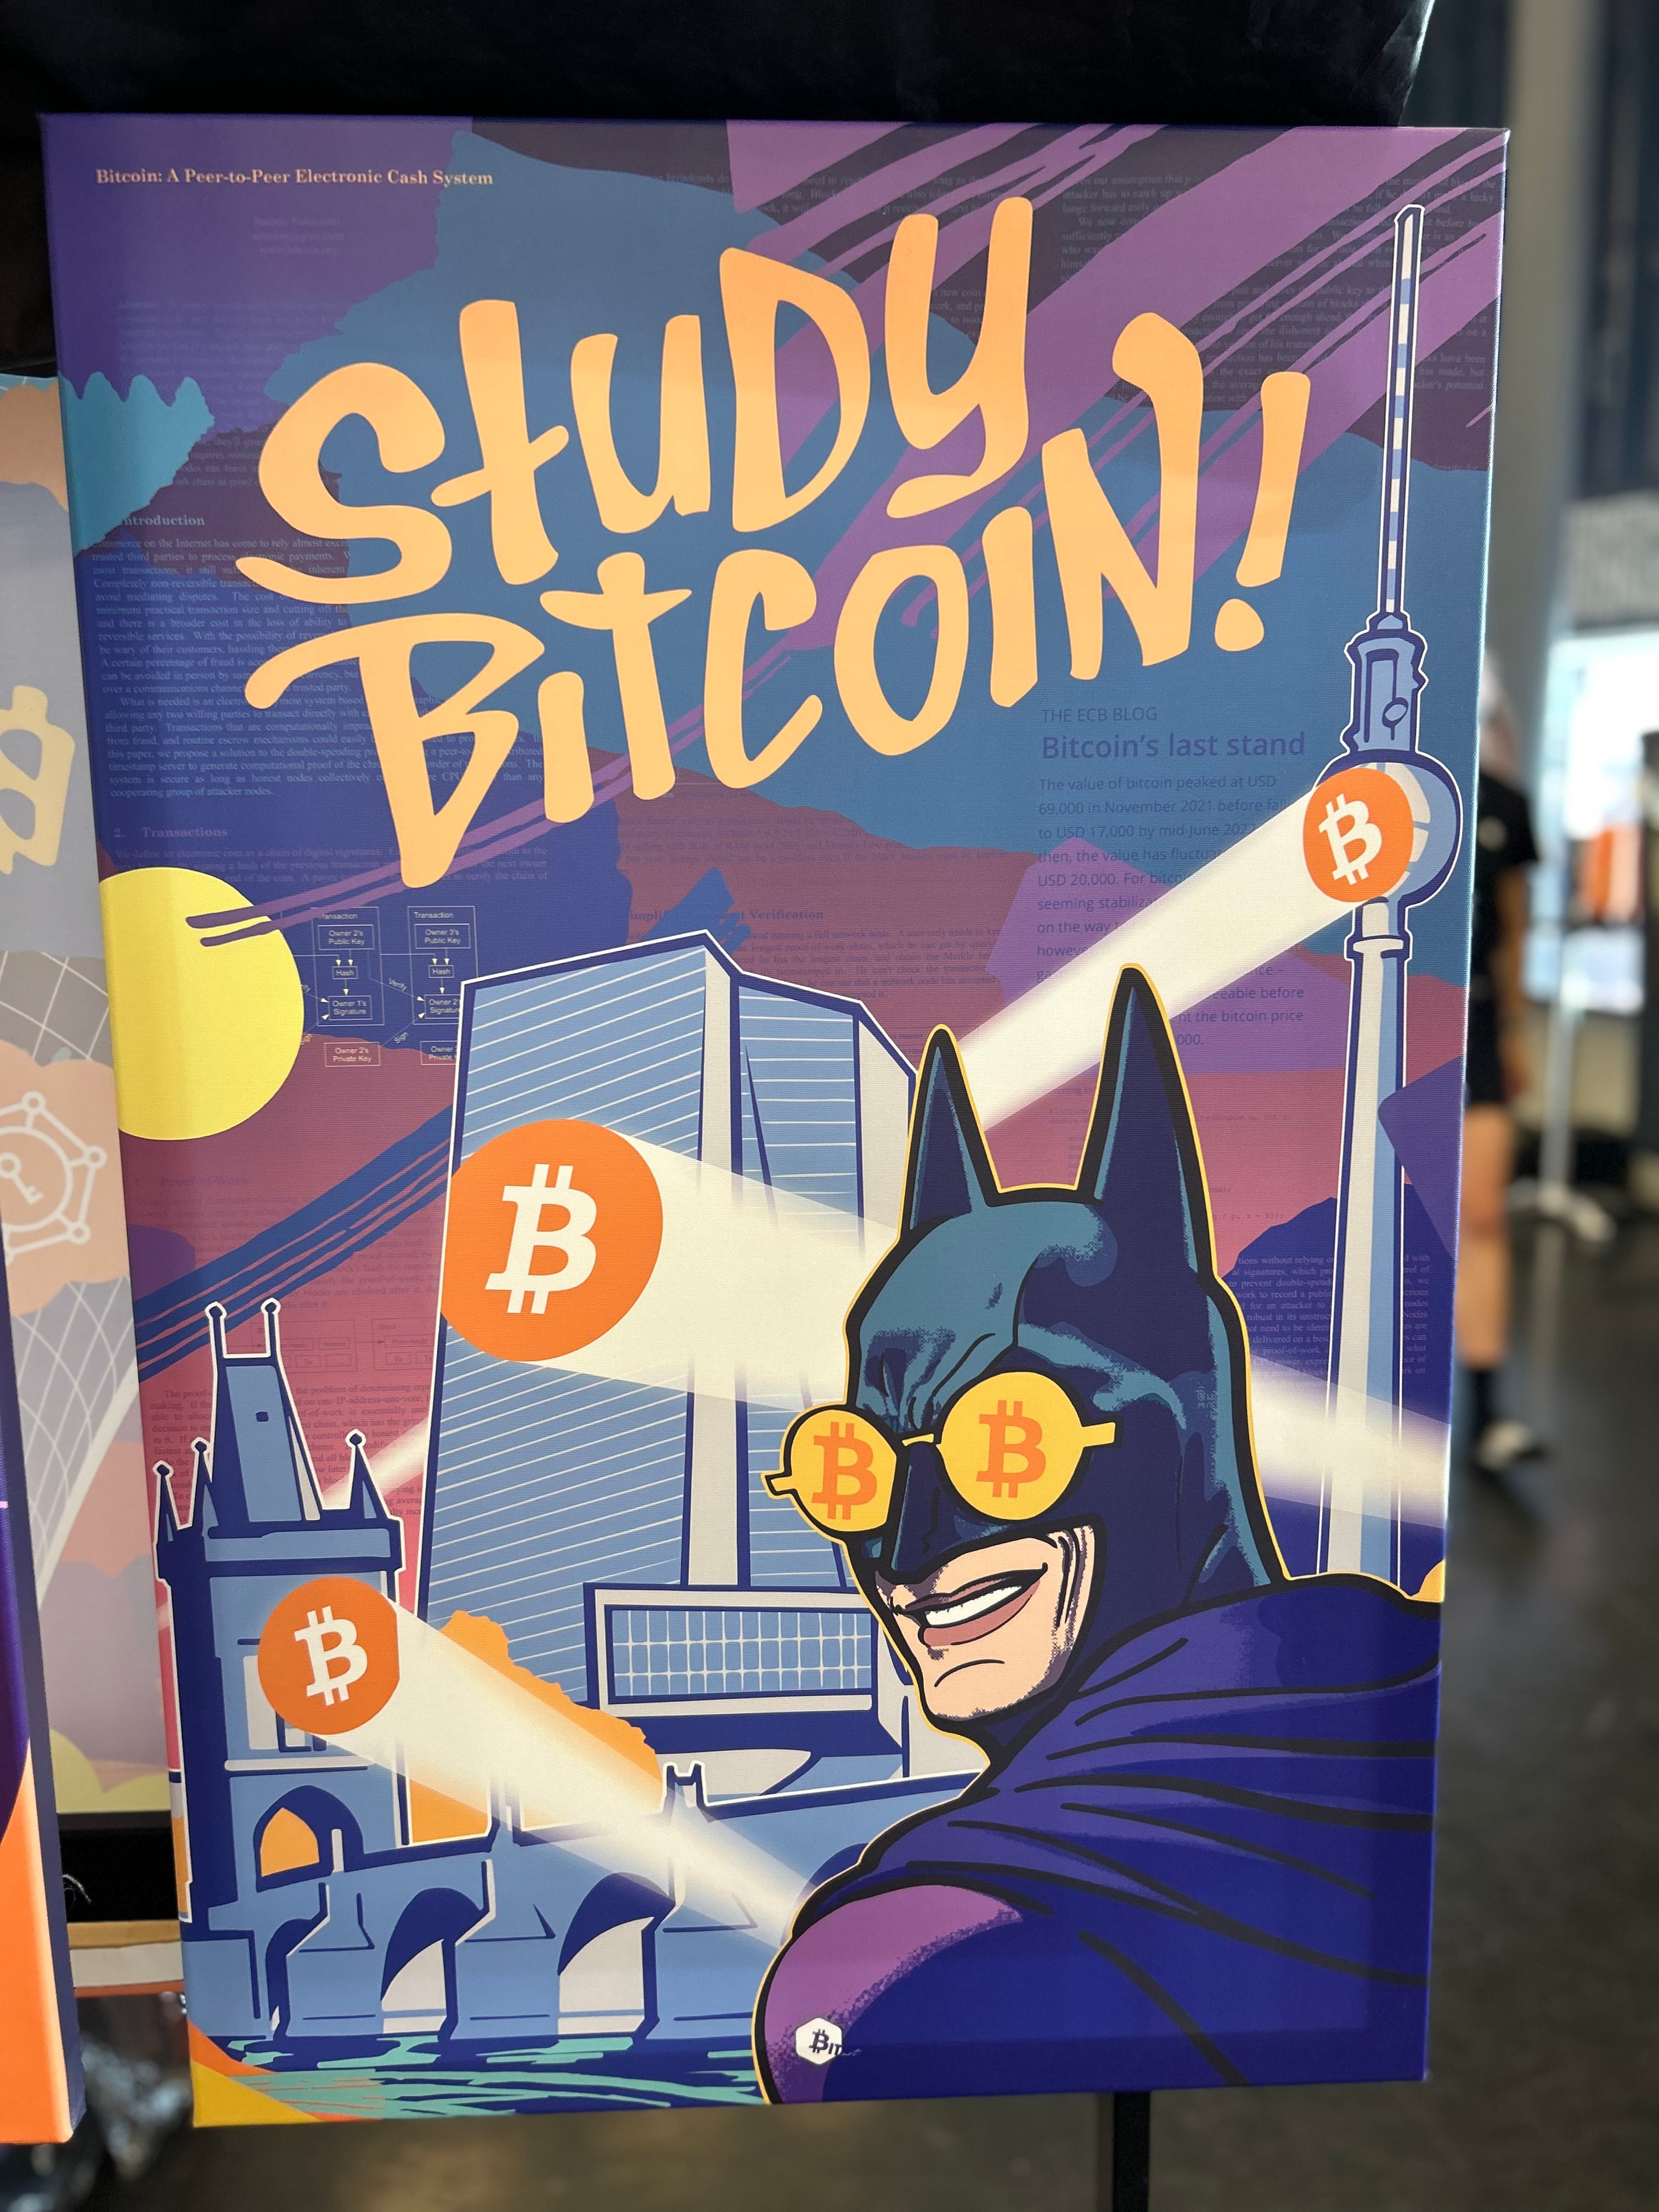 Study Bitcoin!